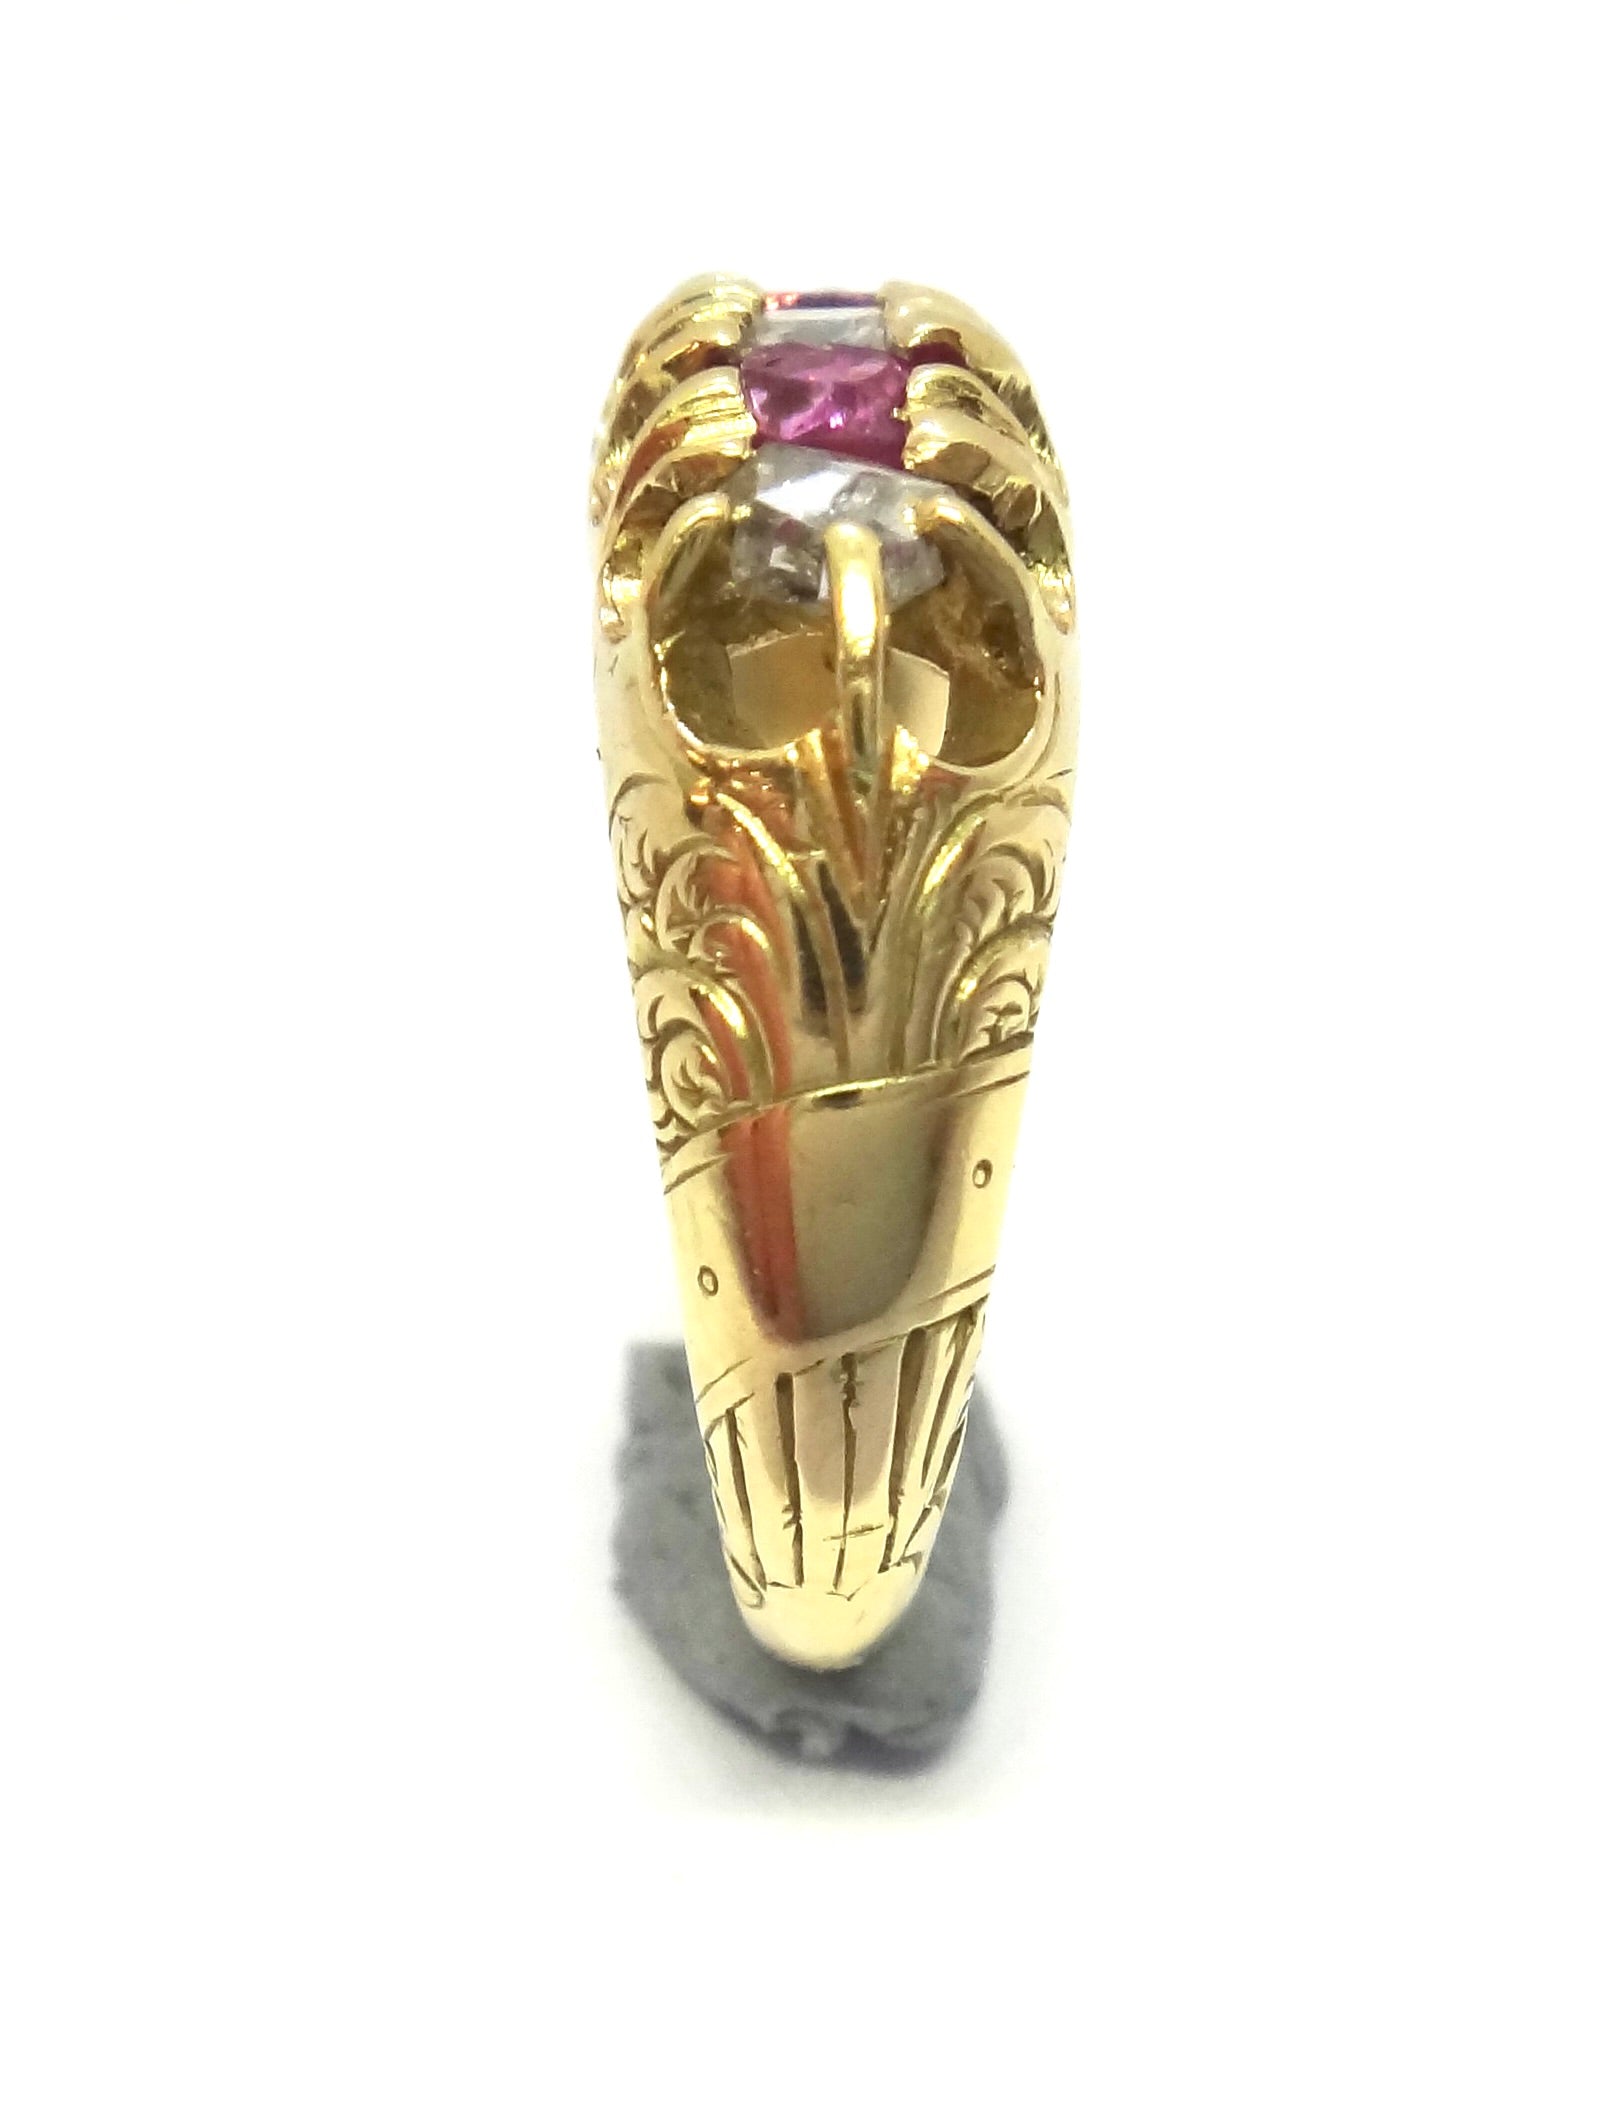 ANTIQUE 18ct Yellow Gold, Diamond & PINK SAPPHIRE Ring c.1890